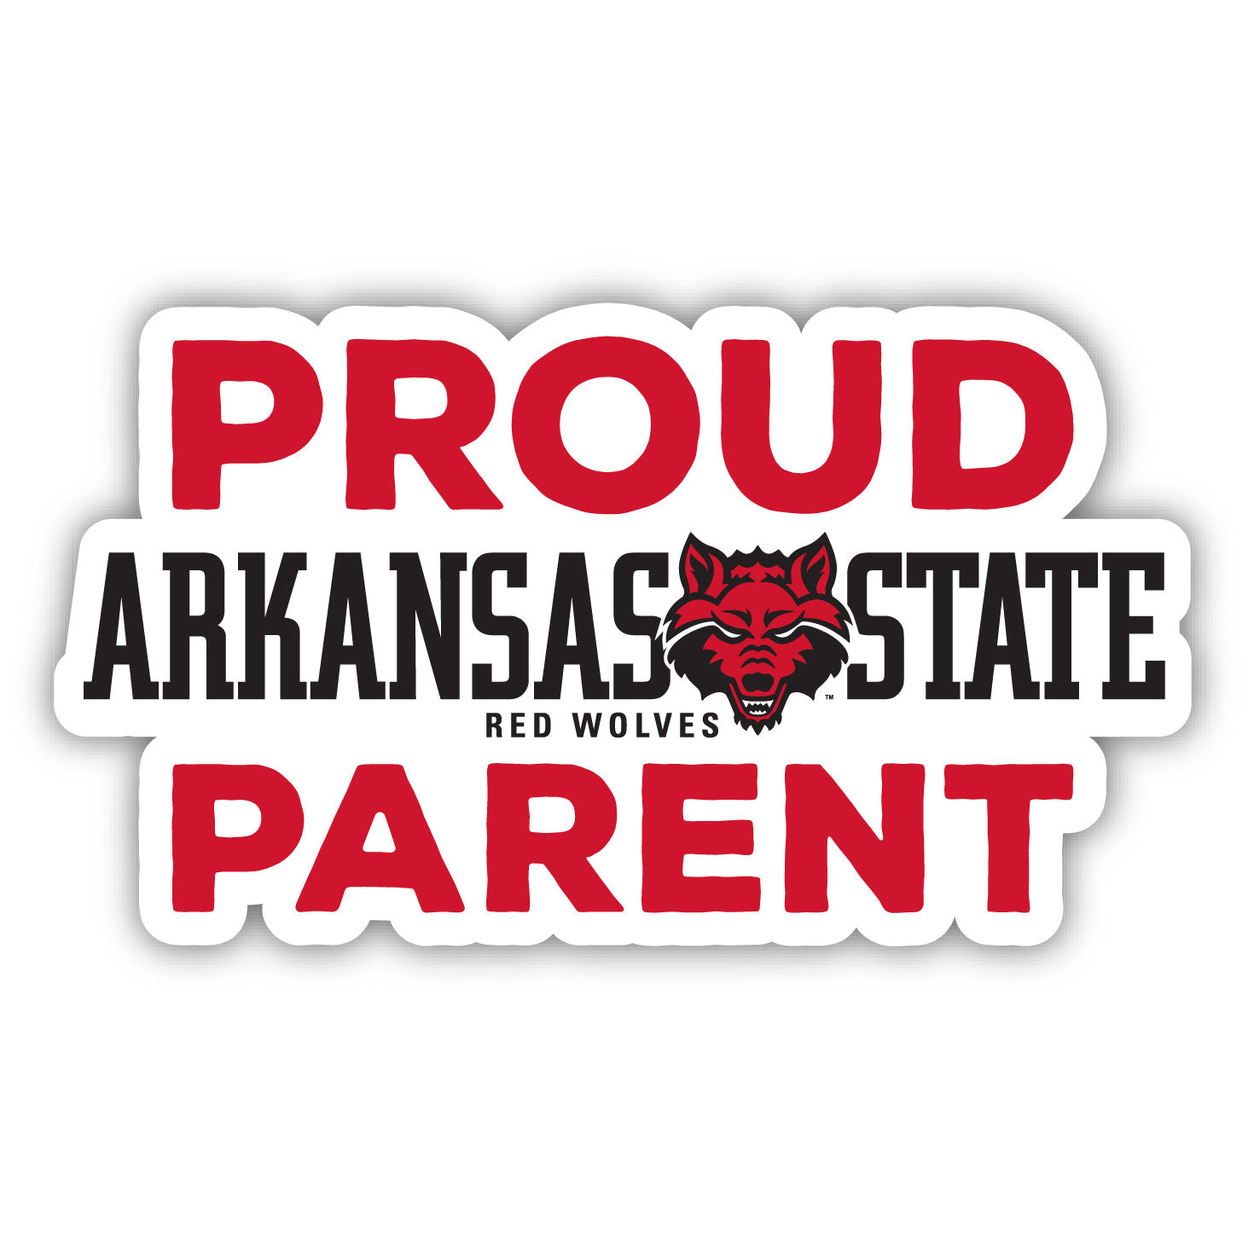 Arkansas State Proud Parent 4 Sticker - (4 Pack)